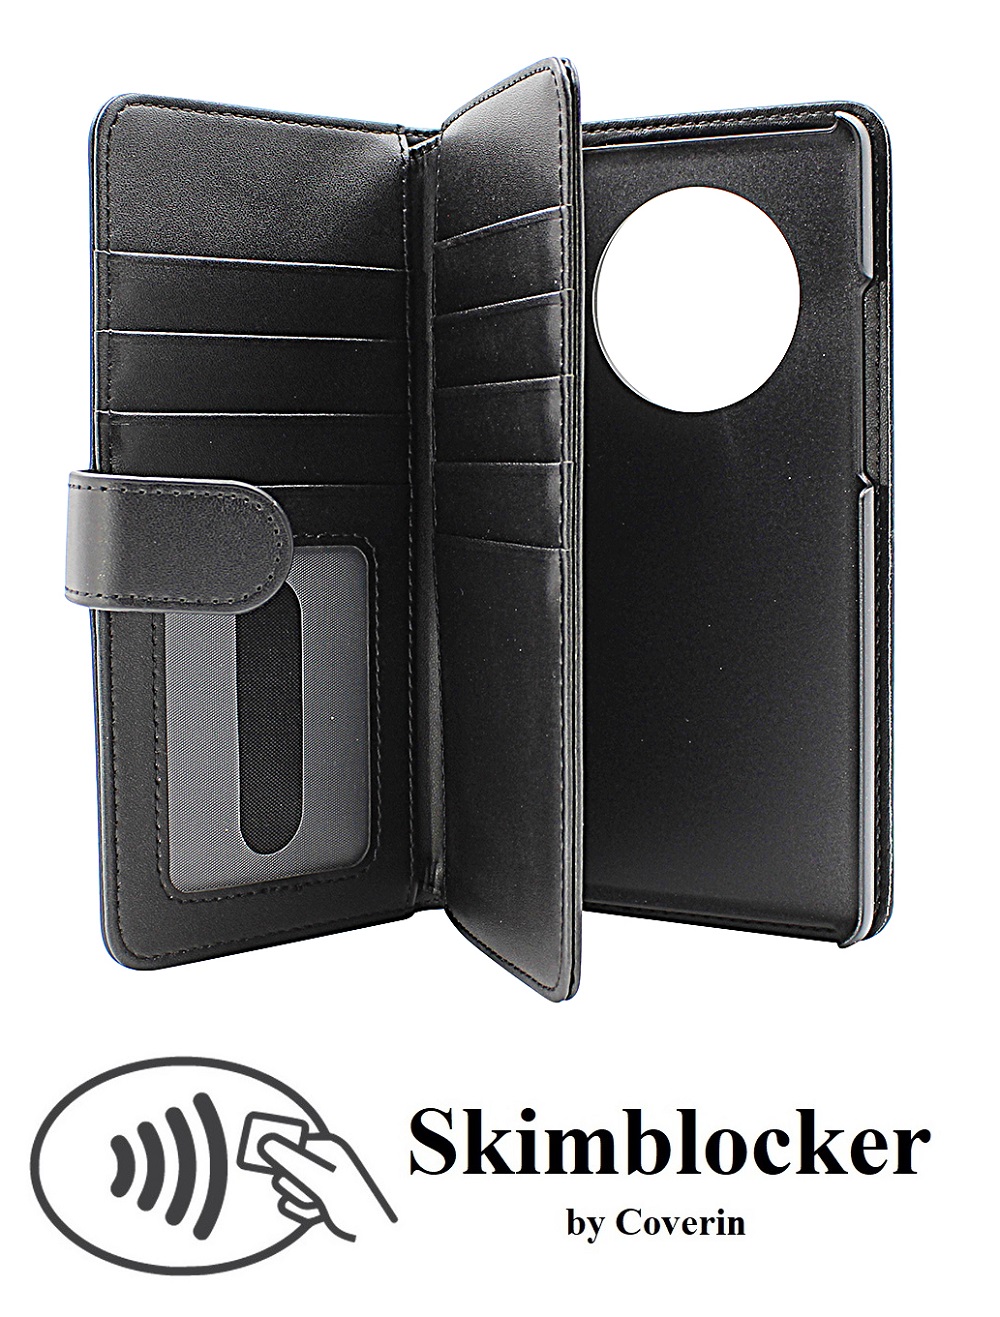 Skimblocker XL Wallet Huawei Mate 40 Pro